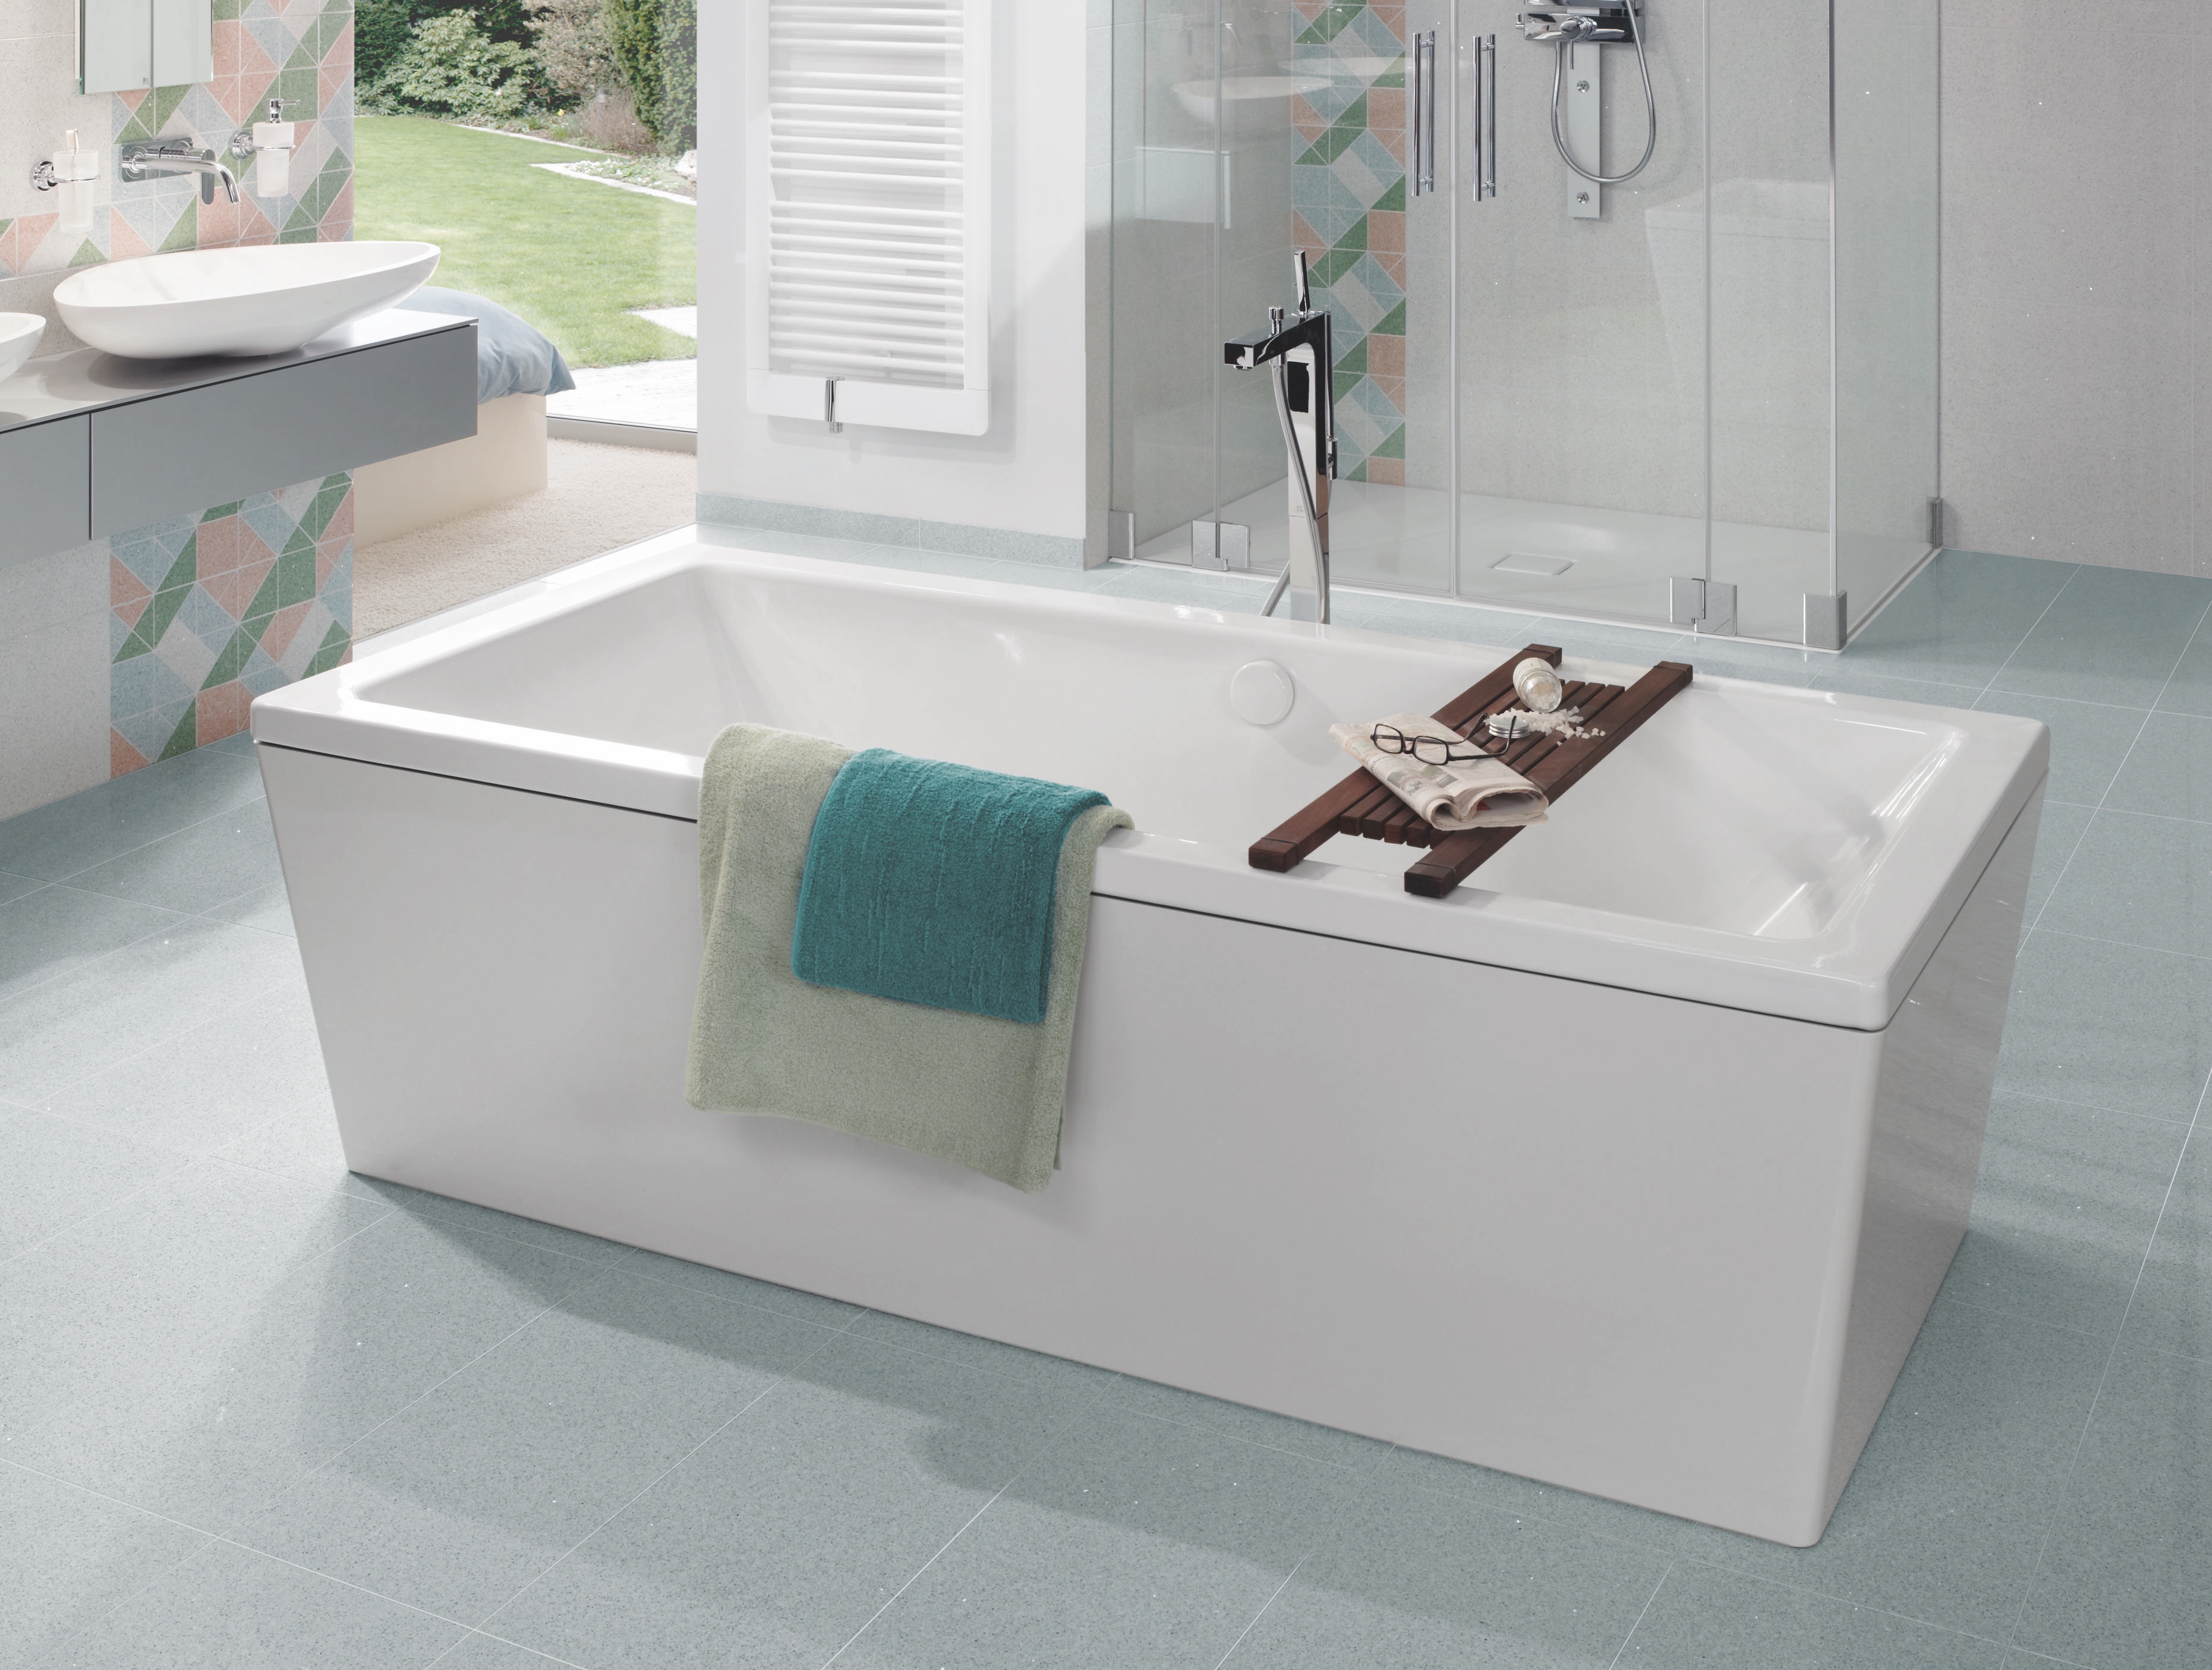 CONODUO freistehend Badewanne, Mod 735-7 2000x1000mm alpinweiß, Vollantislip